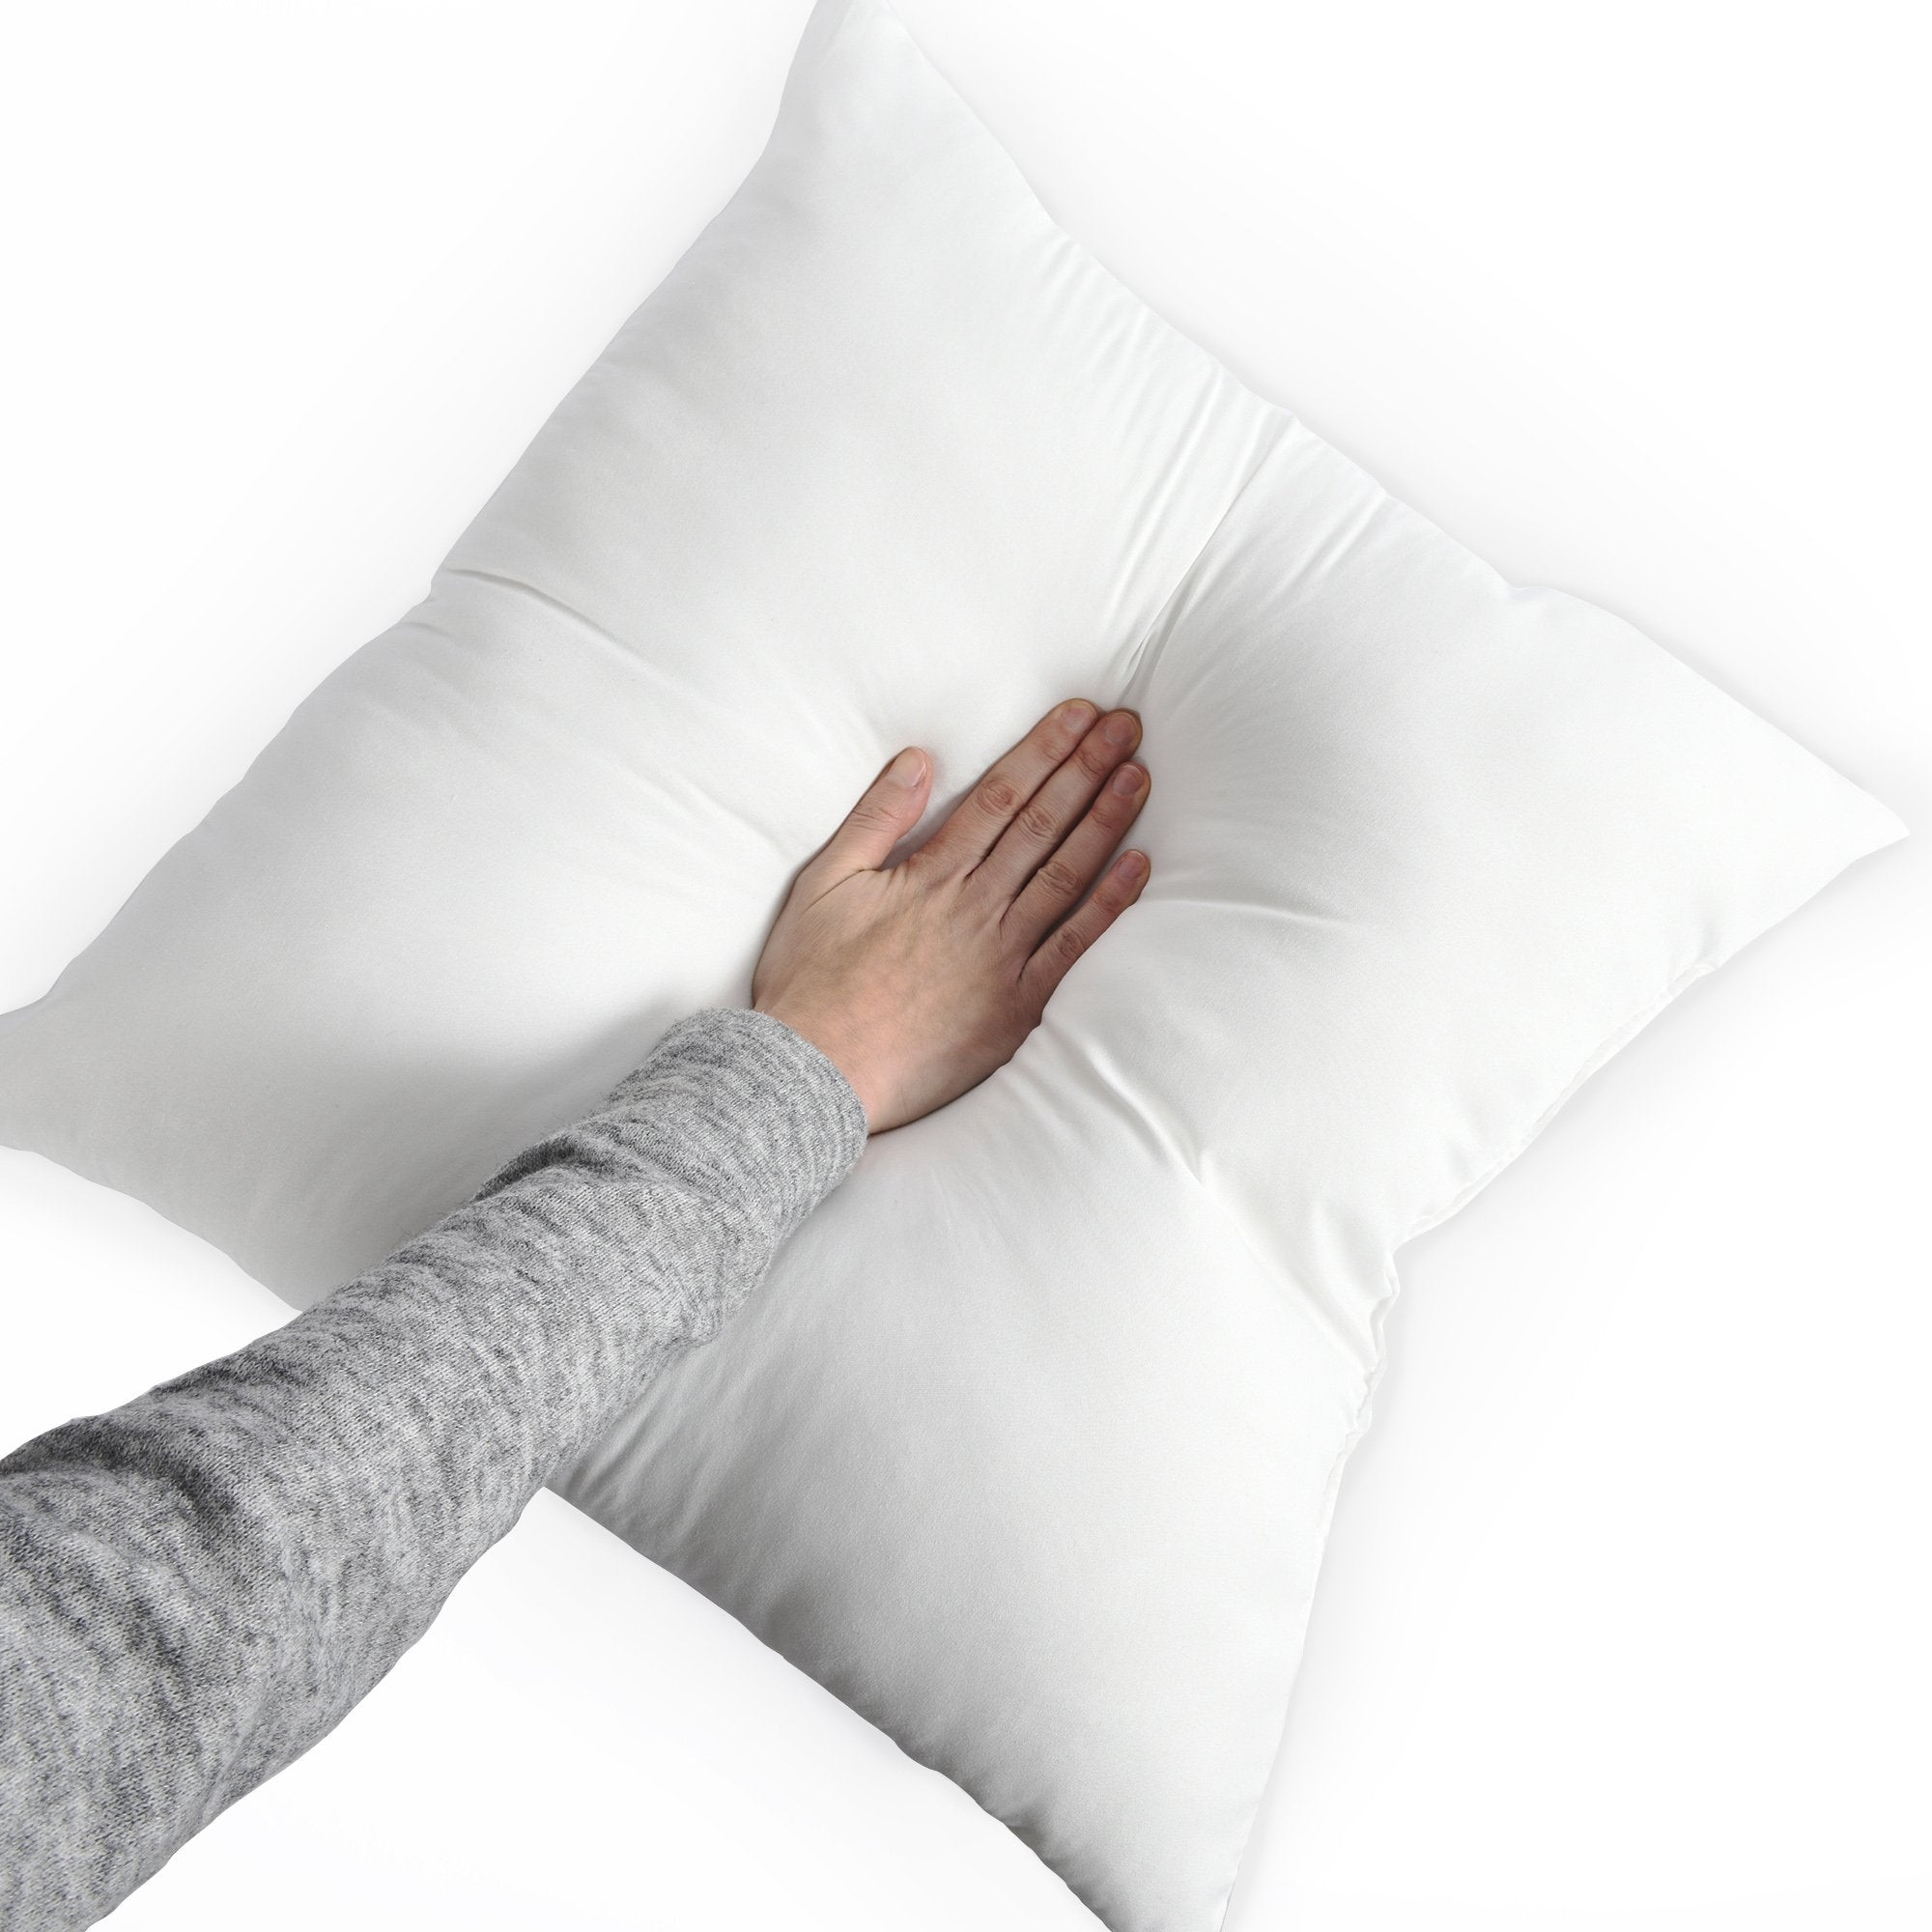 2-Piece White Throw Pillow Insert, 20 x 20 – Nemcor Inc. (US)